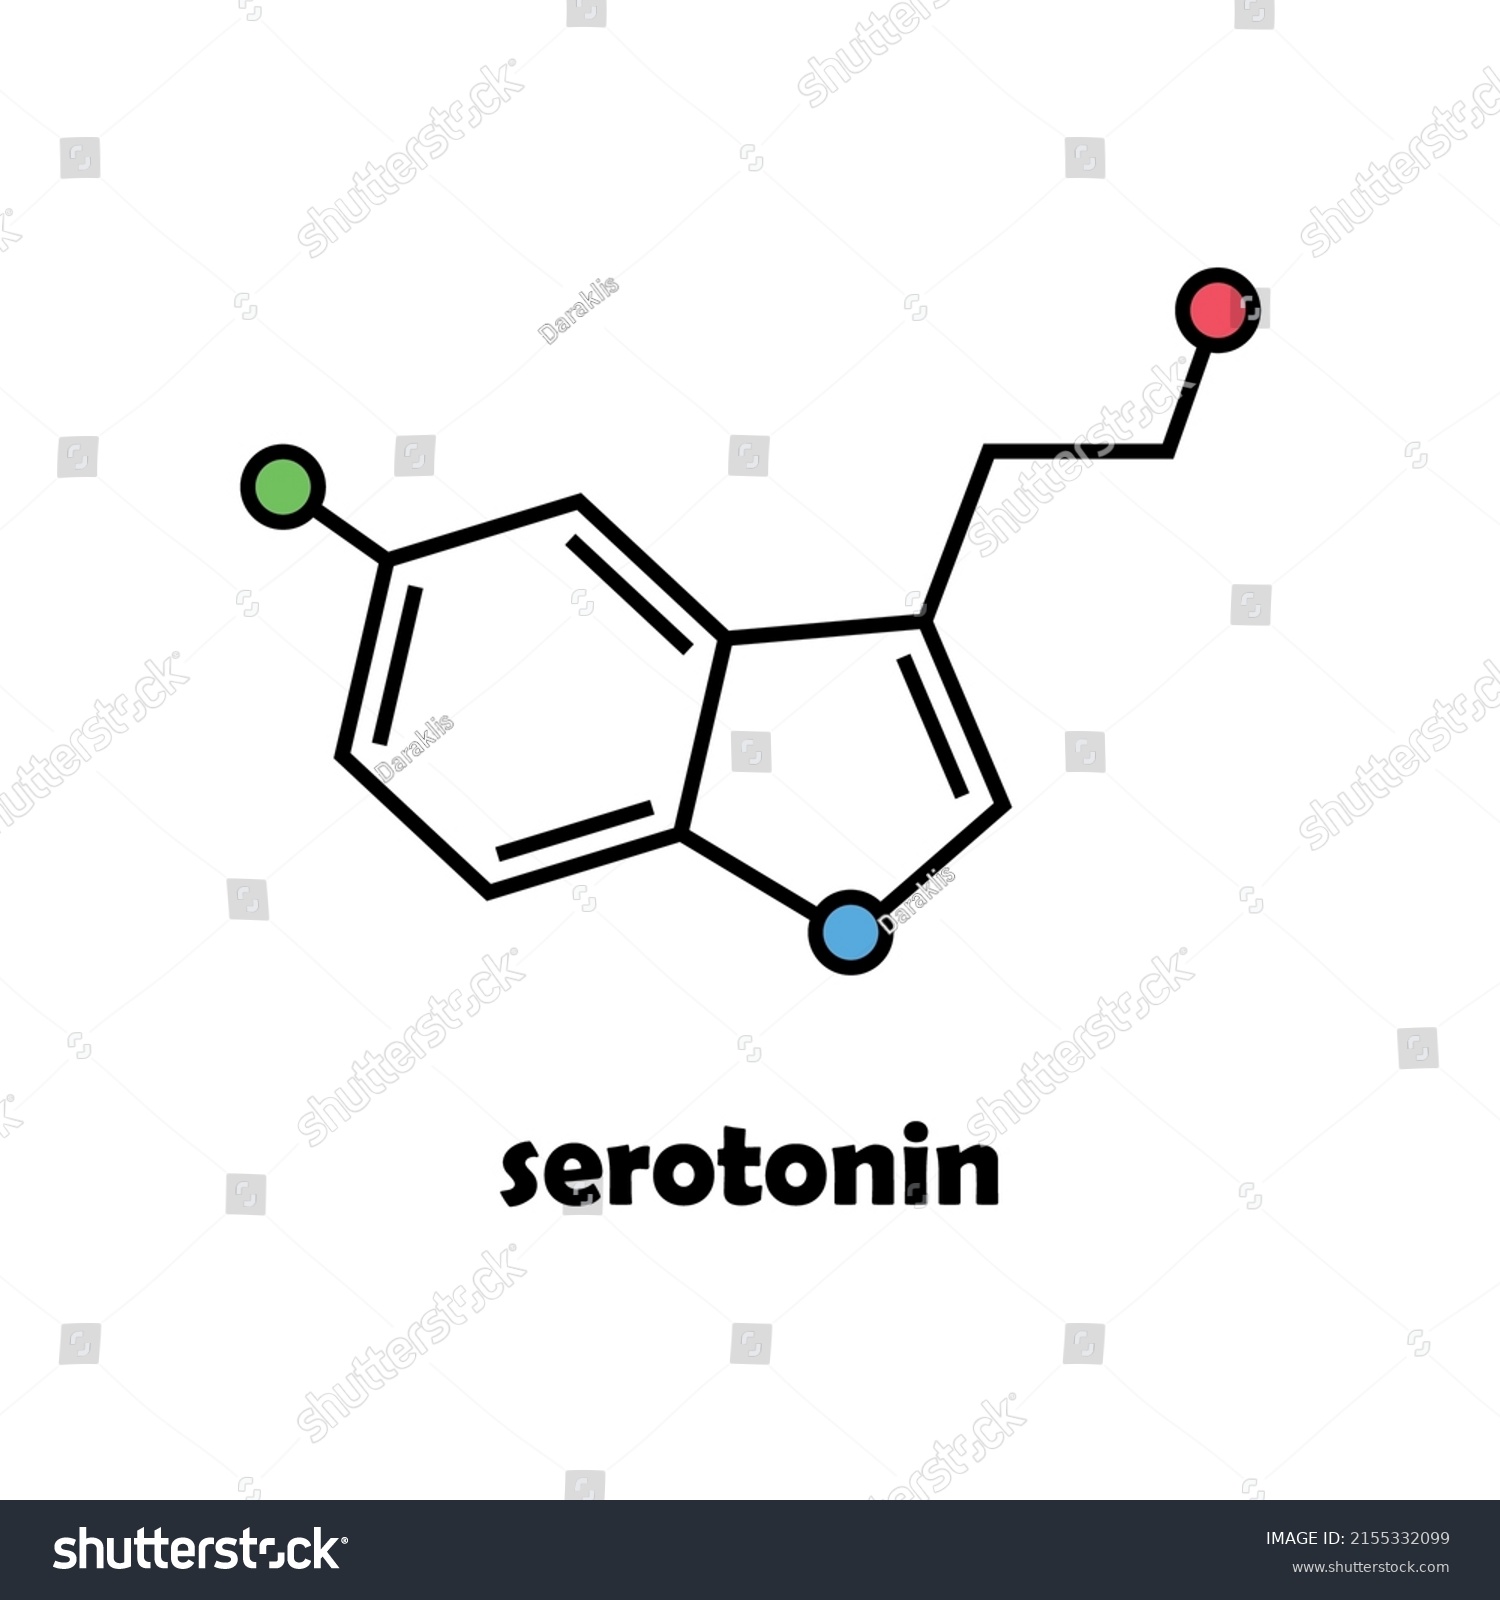 Serotonin Drawing Vector Art On White Stock Vector (Royalty Free